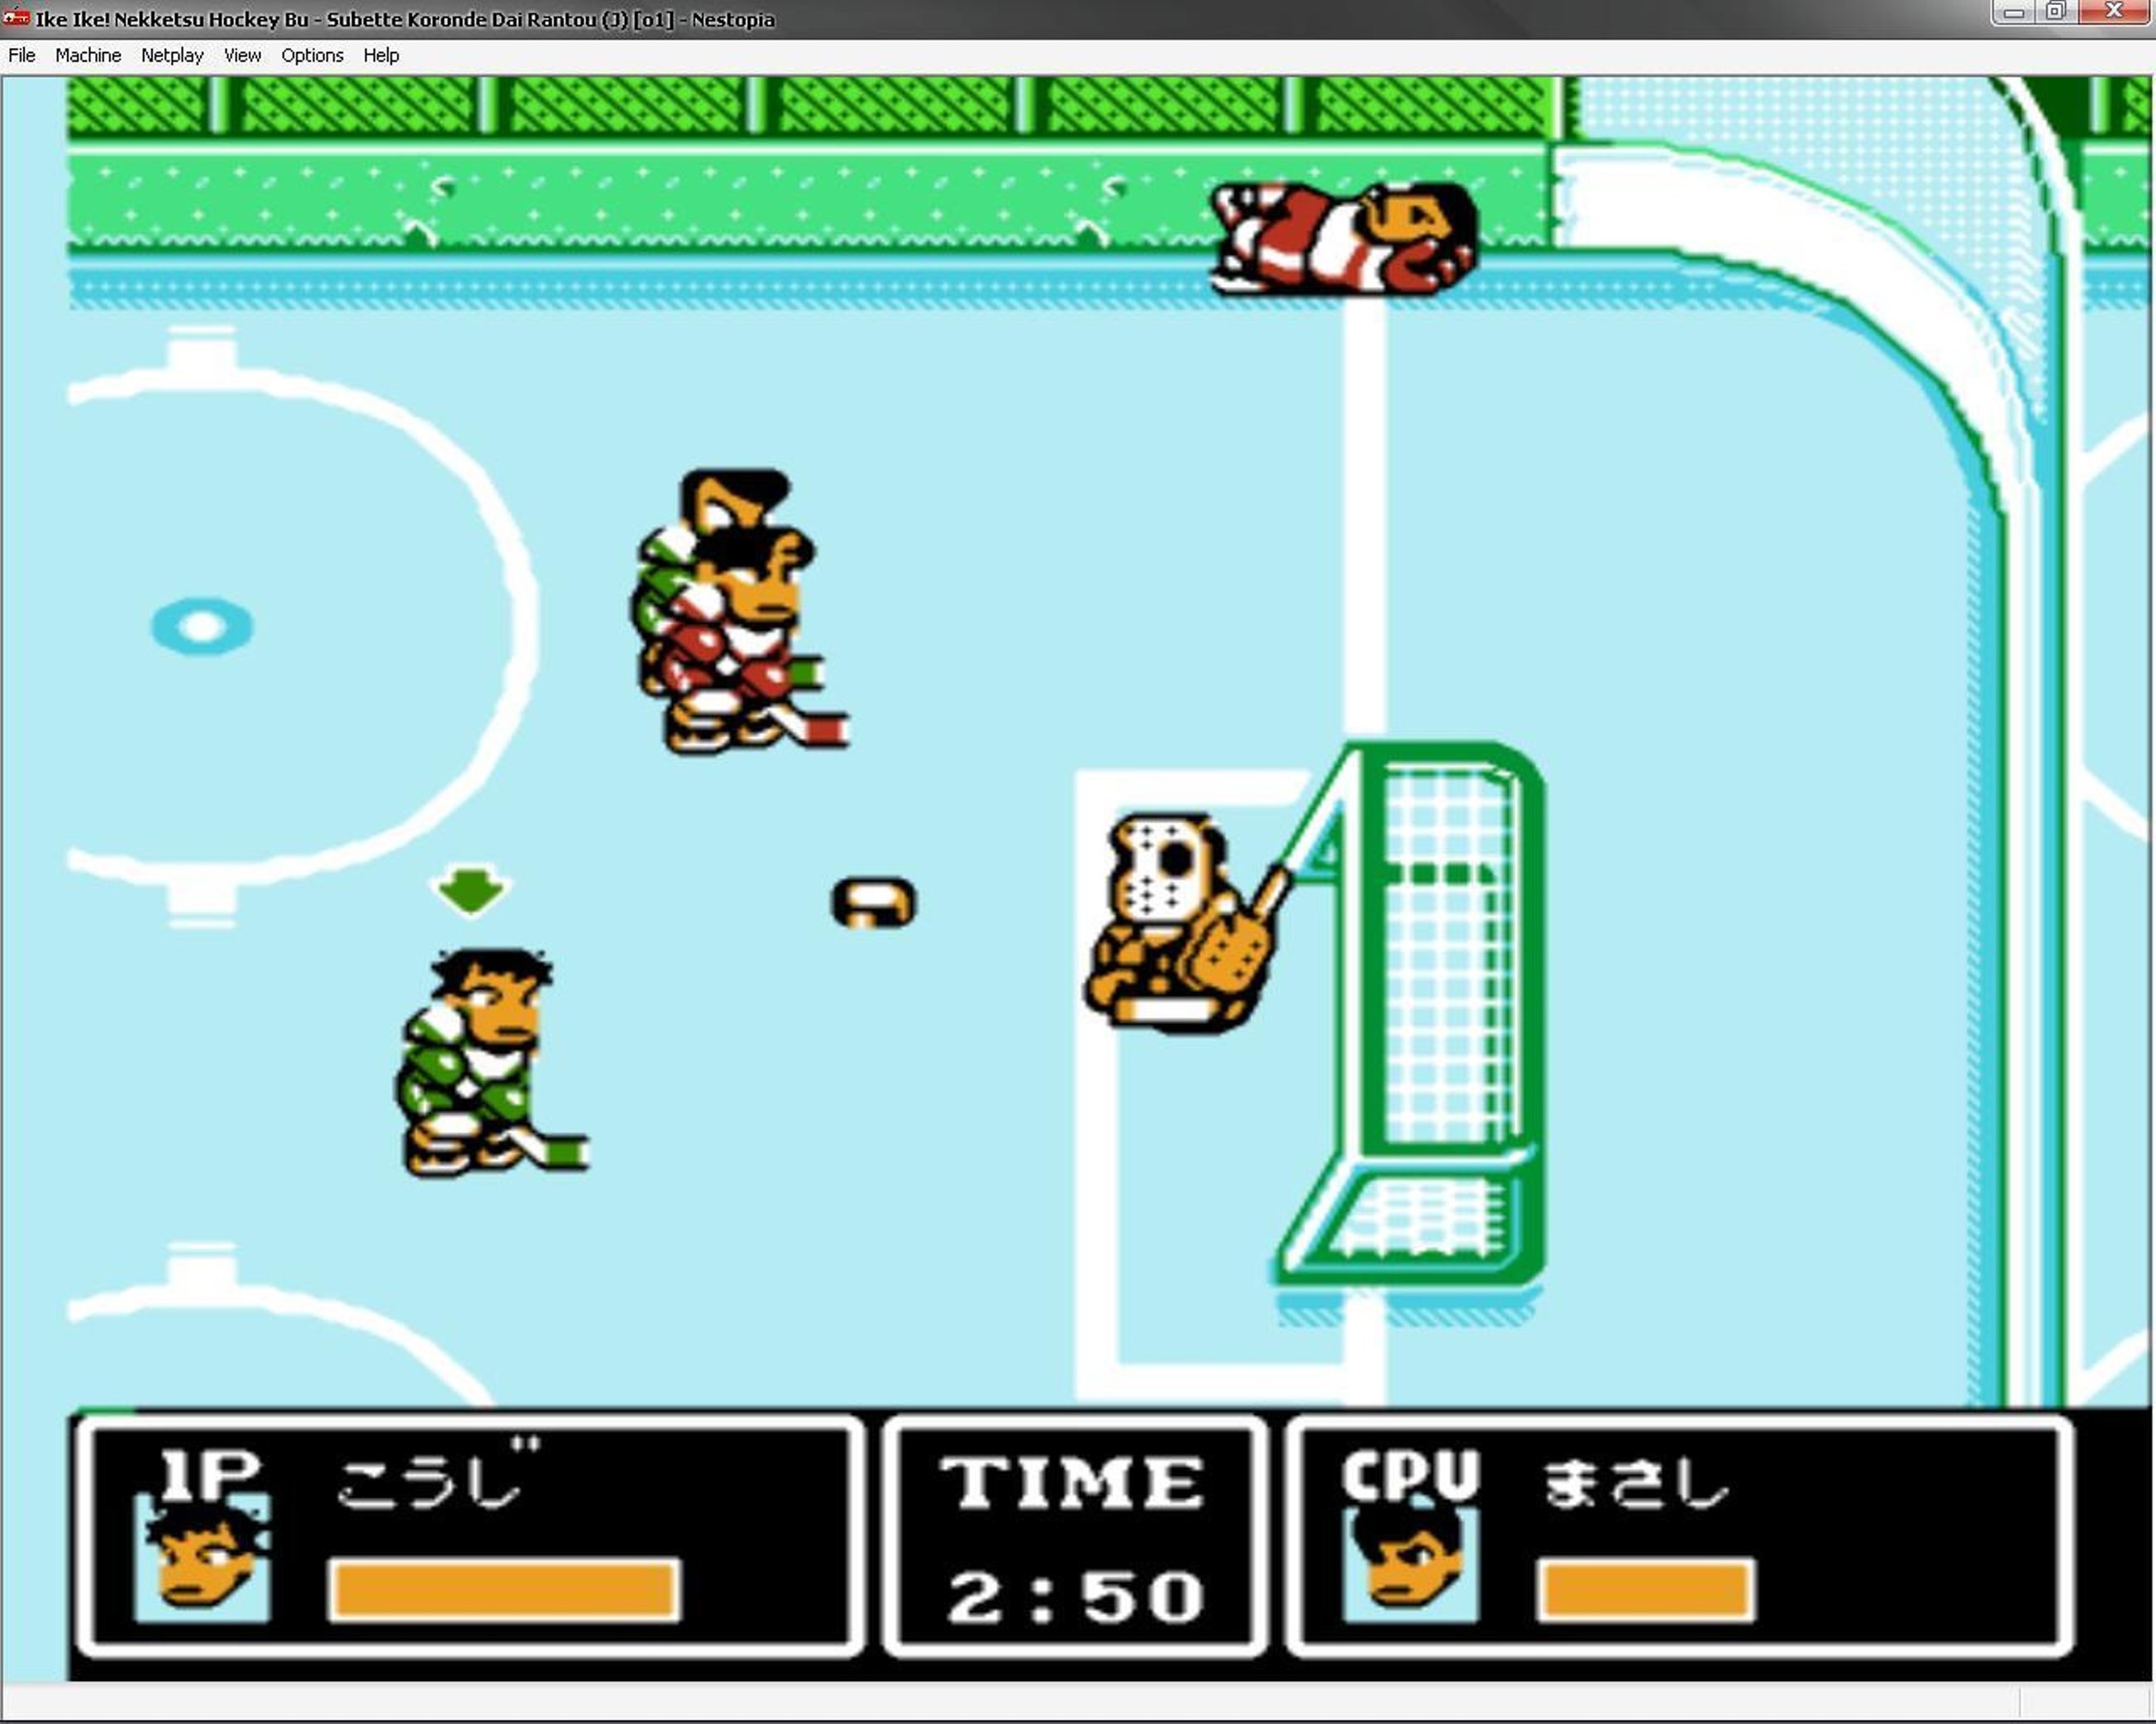 Игра на приставку 8. Игра Nekketsu Hockey. Хоккей Nekketsu Dendy. Некетсу игры Денди хоккей. Ike Ike Nekketsu Hockey (Неккетсу хоккей) картридж.